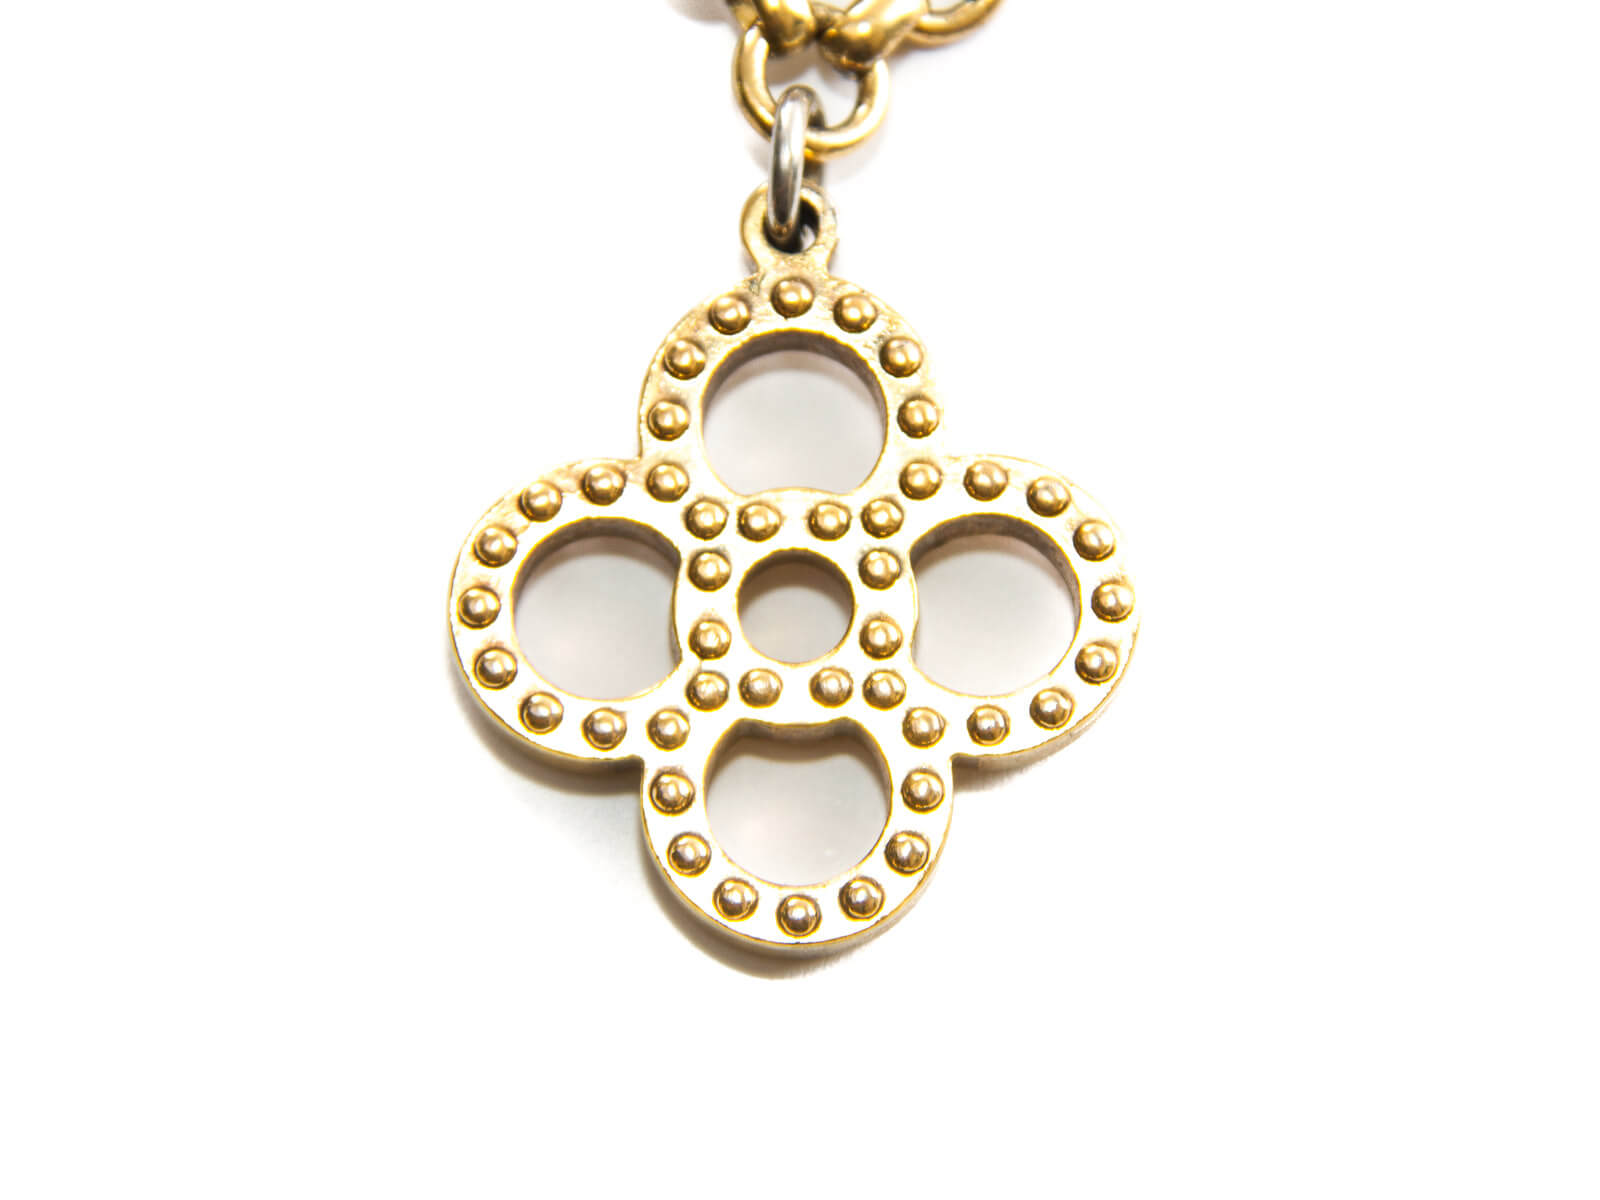 Louis Vuitton Authentic Metal bijoux sac tapage Key Chain Bag Charm Auth LV